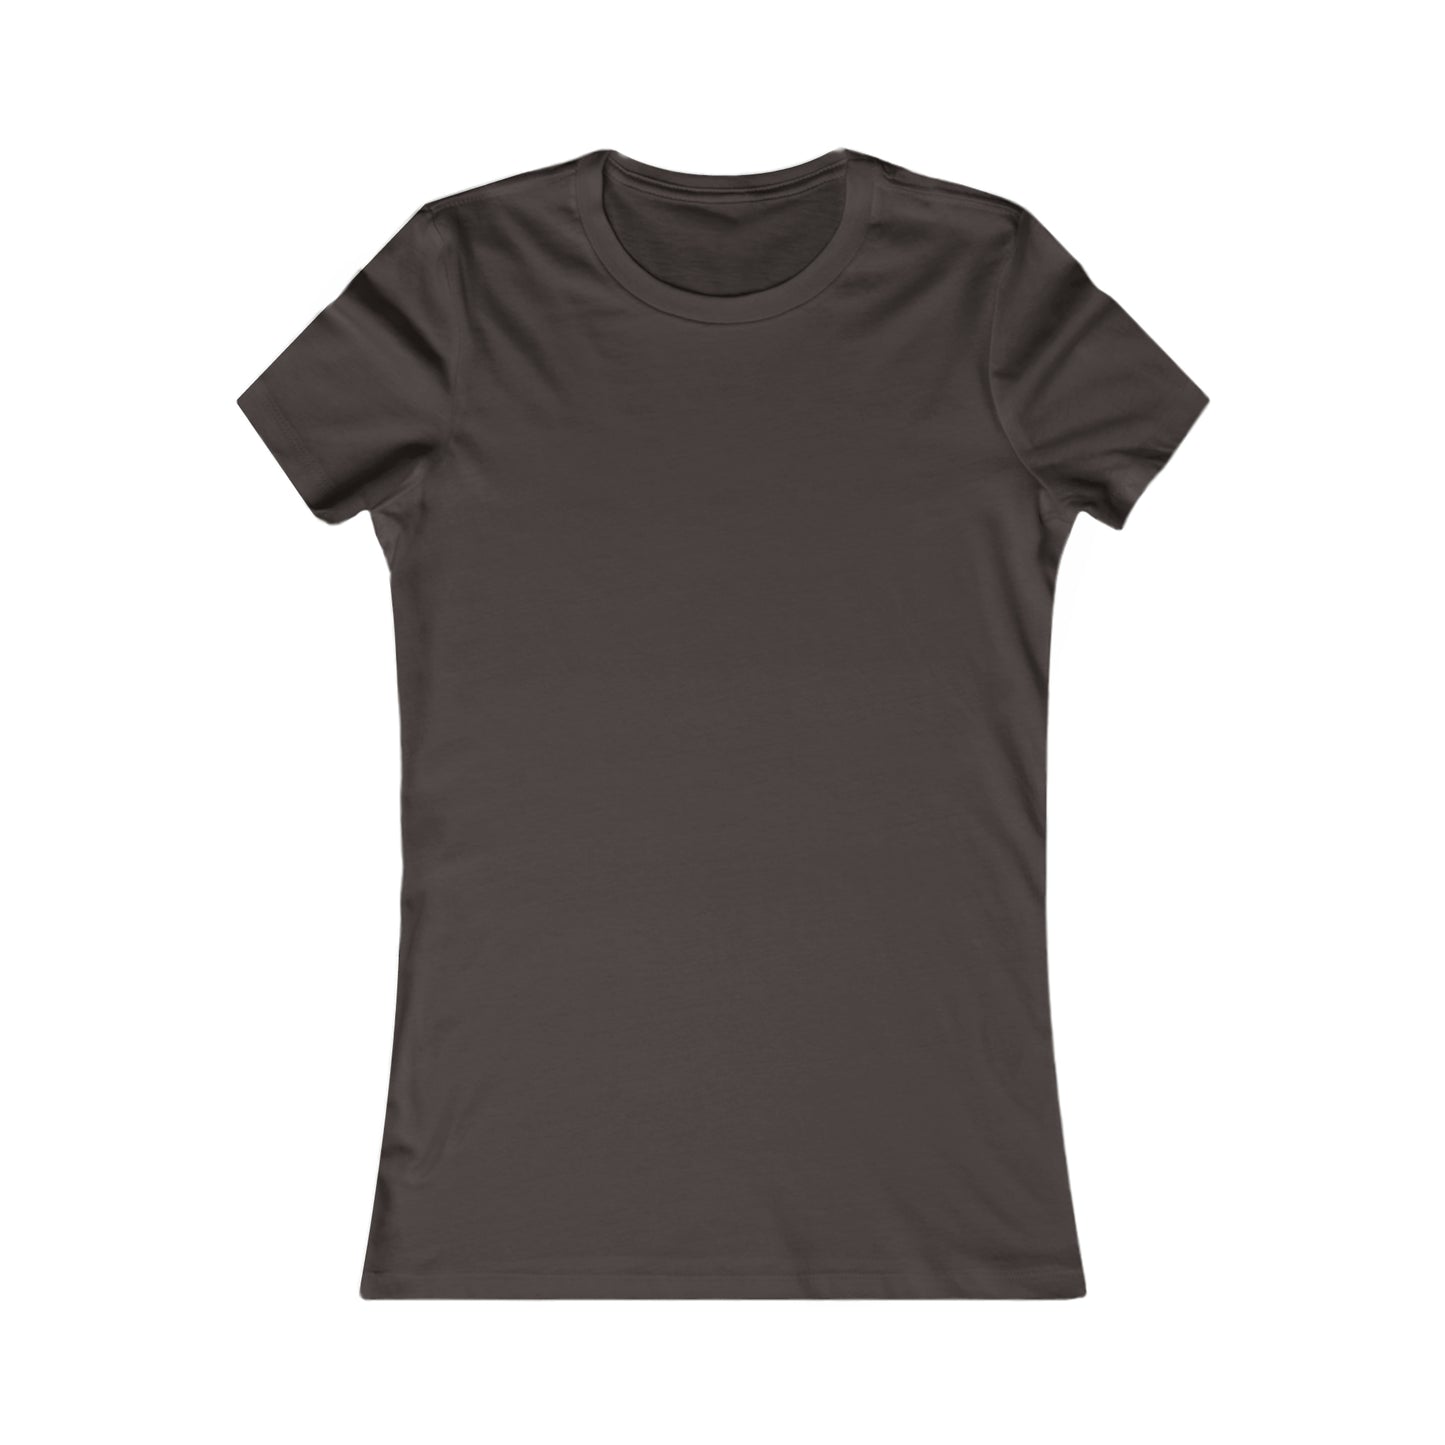 Chocolate Brown - Women's Favorite T Shirt